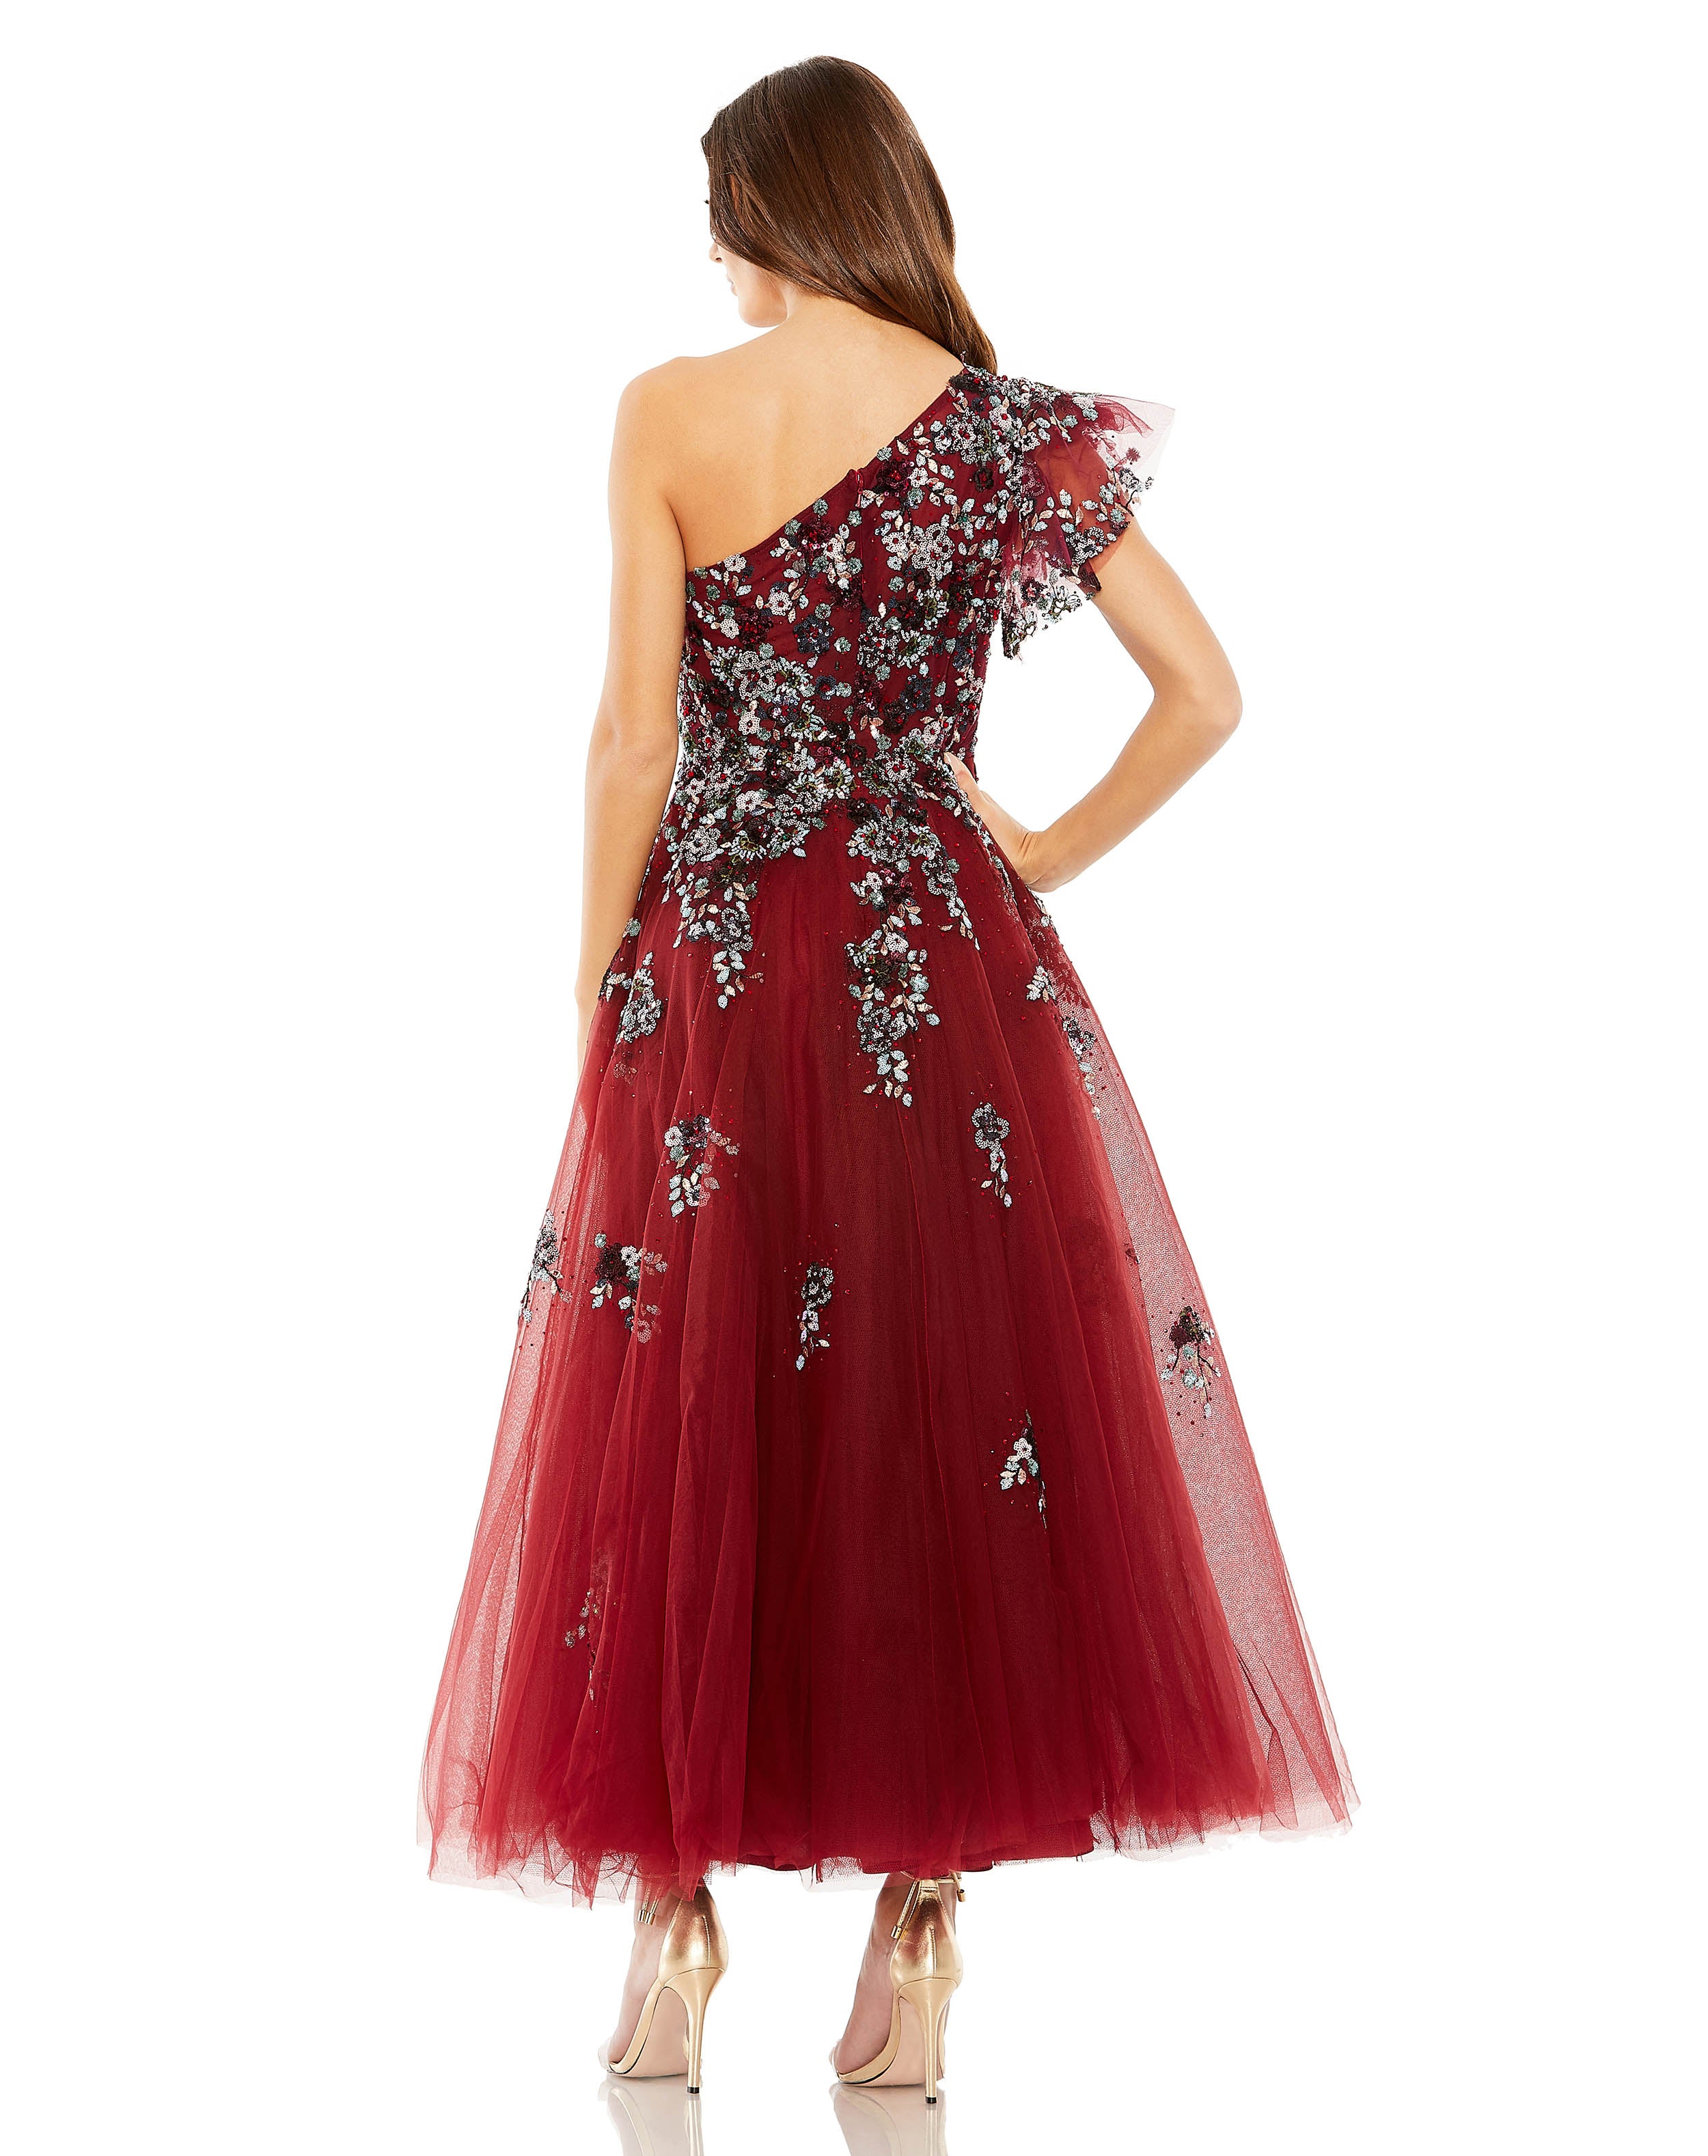 Embellished Ruffle One Shoulder Fit and Flare Dress | Sample | Sz. 2